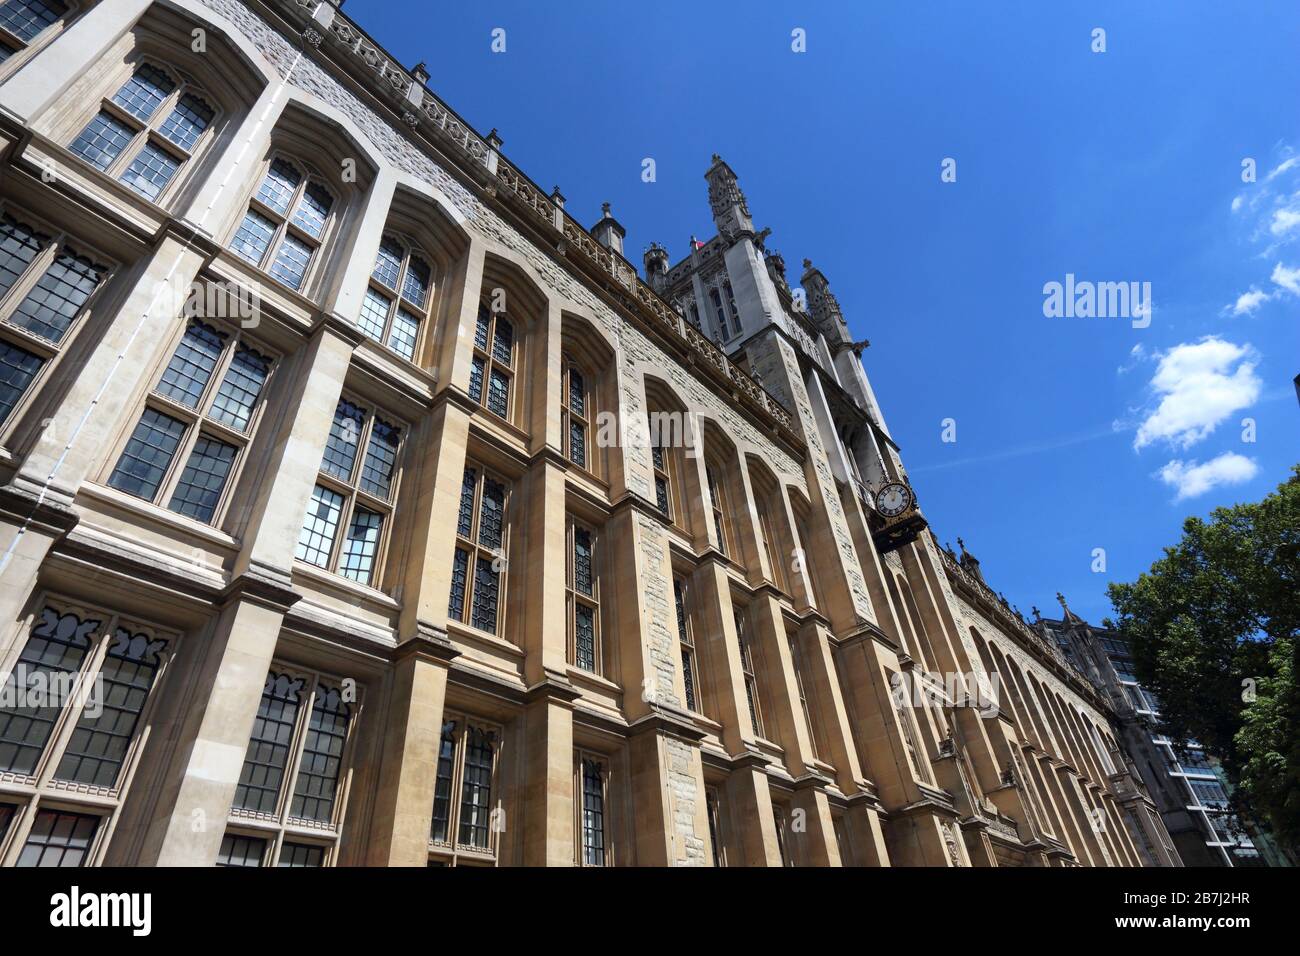 London UK landmark - Maughan Library of King's College London. Landmarks of the world. Stock Photo